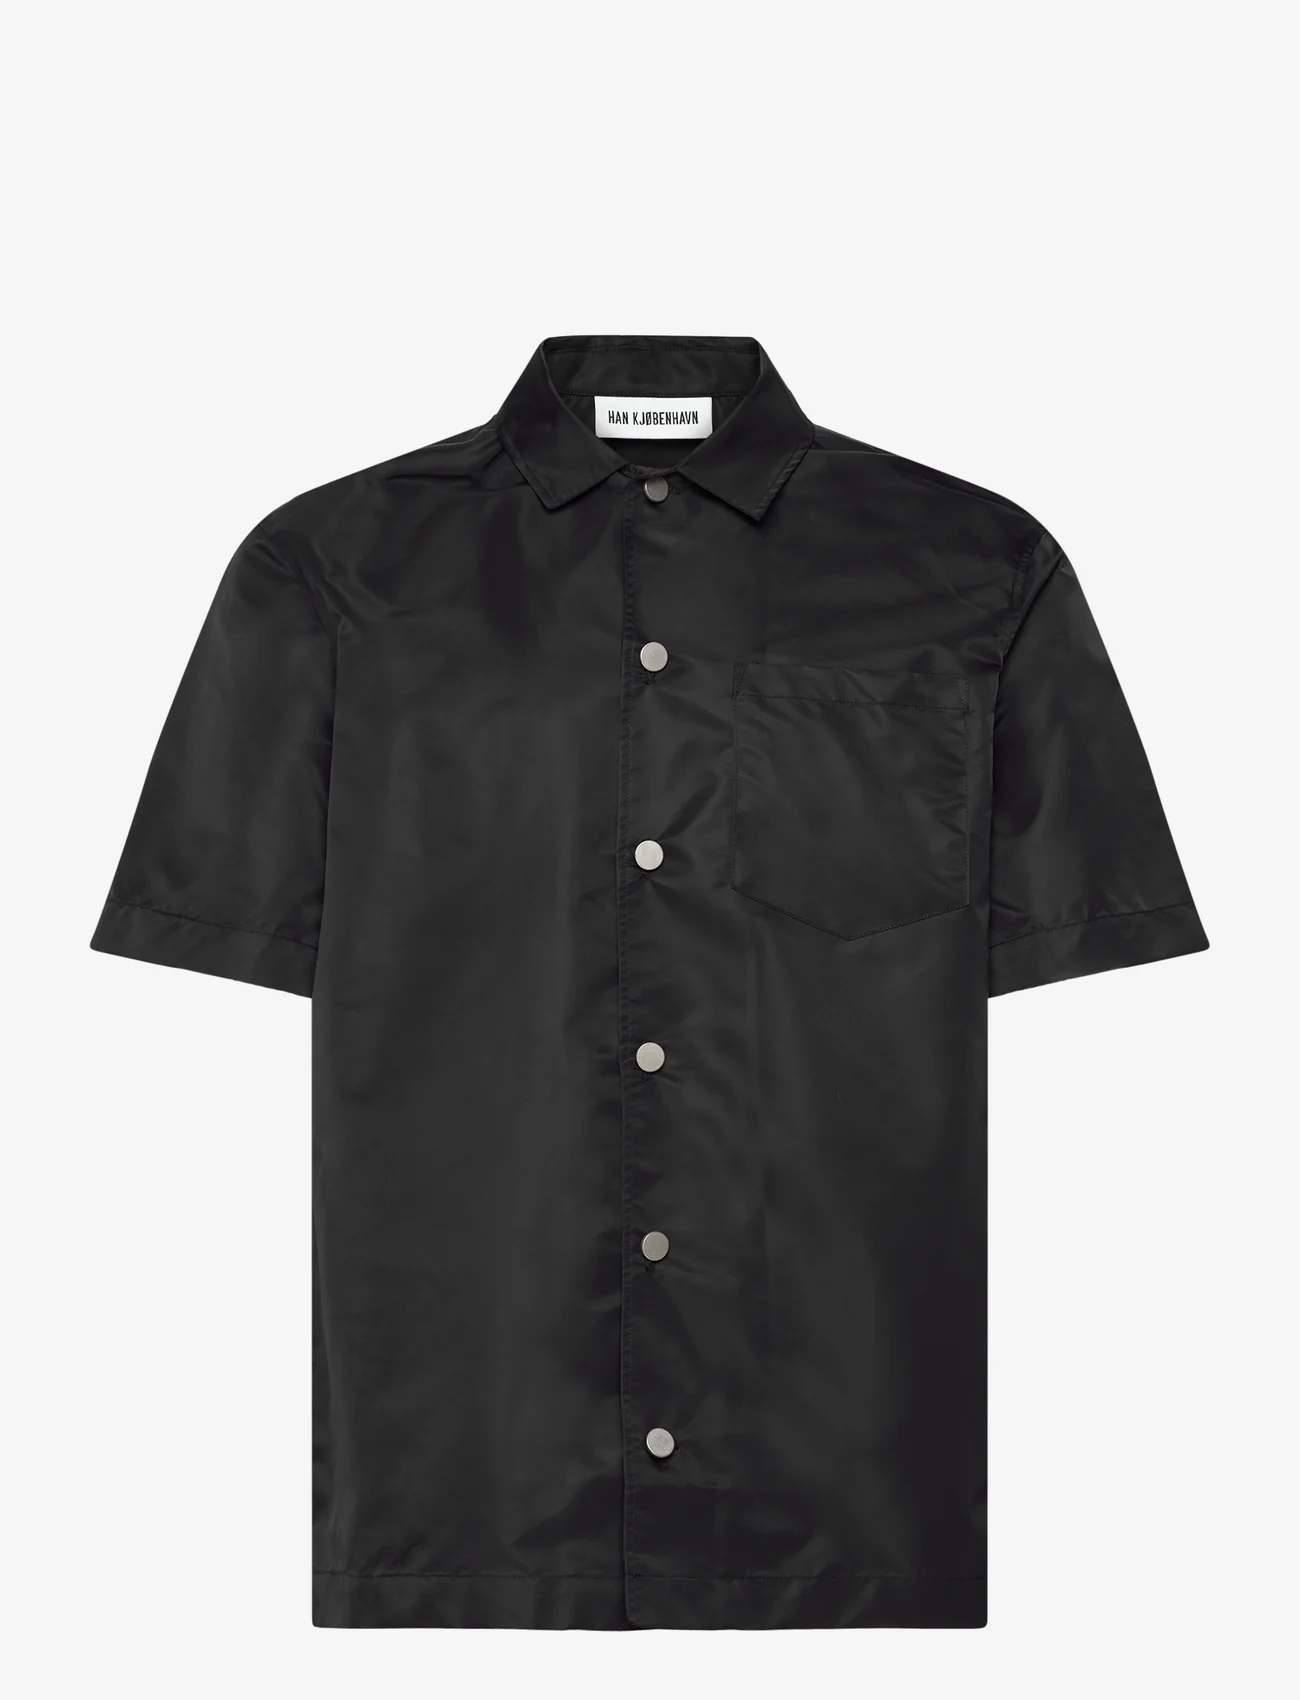 HAN Kjøbenhavn - Recycled Nylon Summer Shirt - short-sleeved t-shirts - black - 0